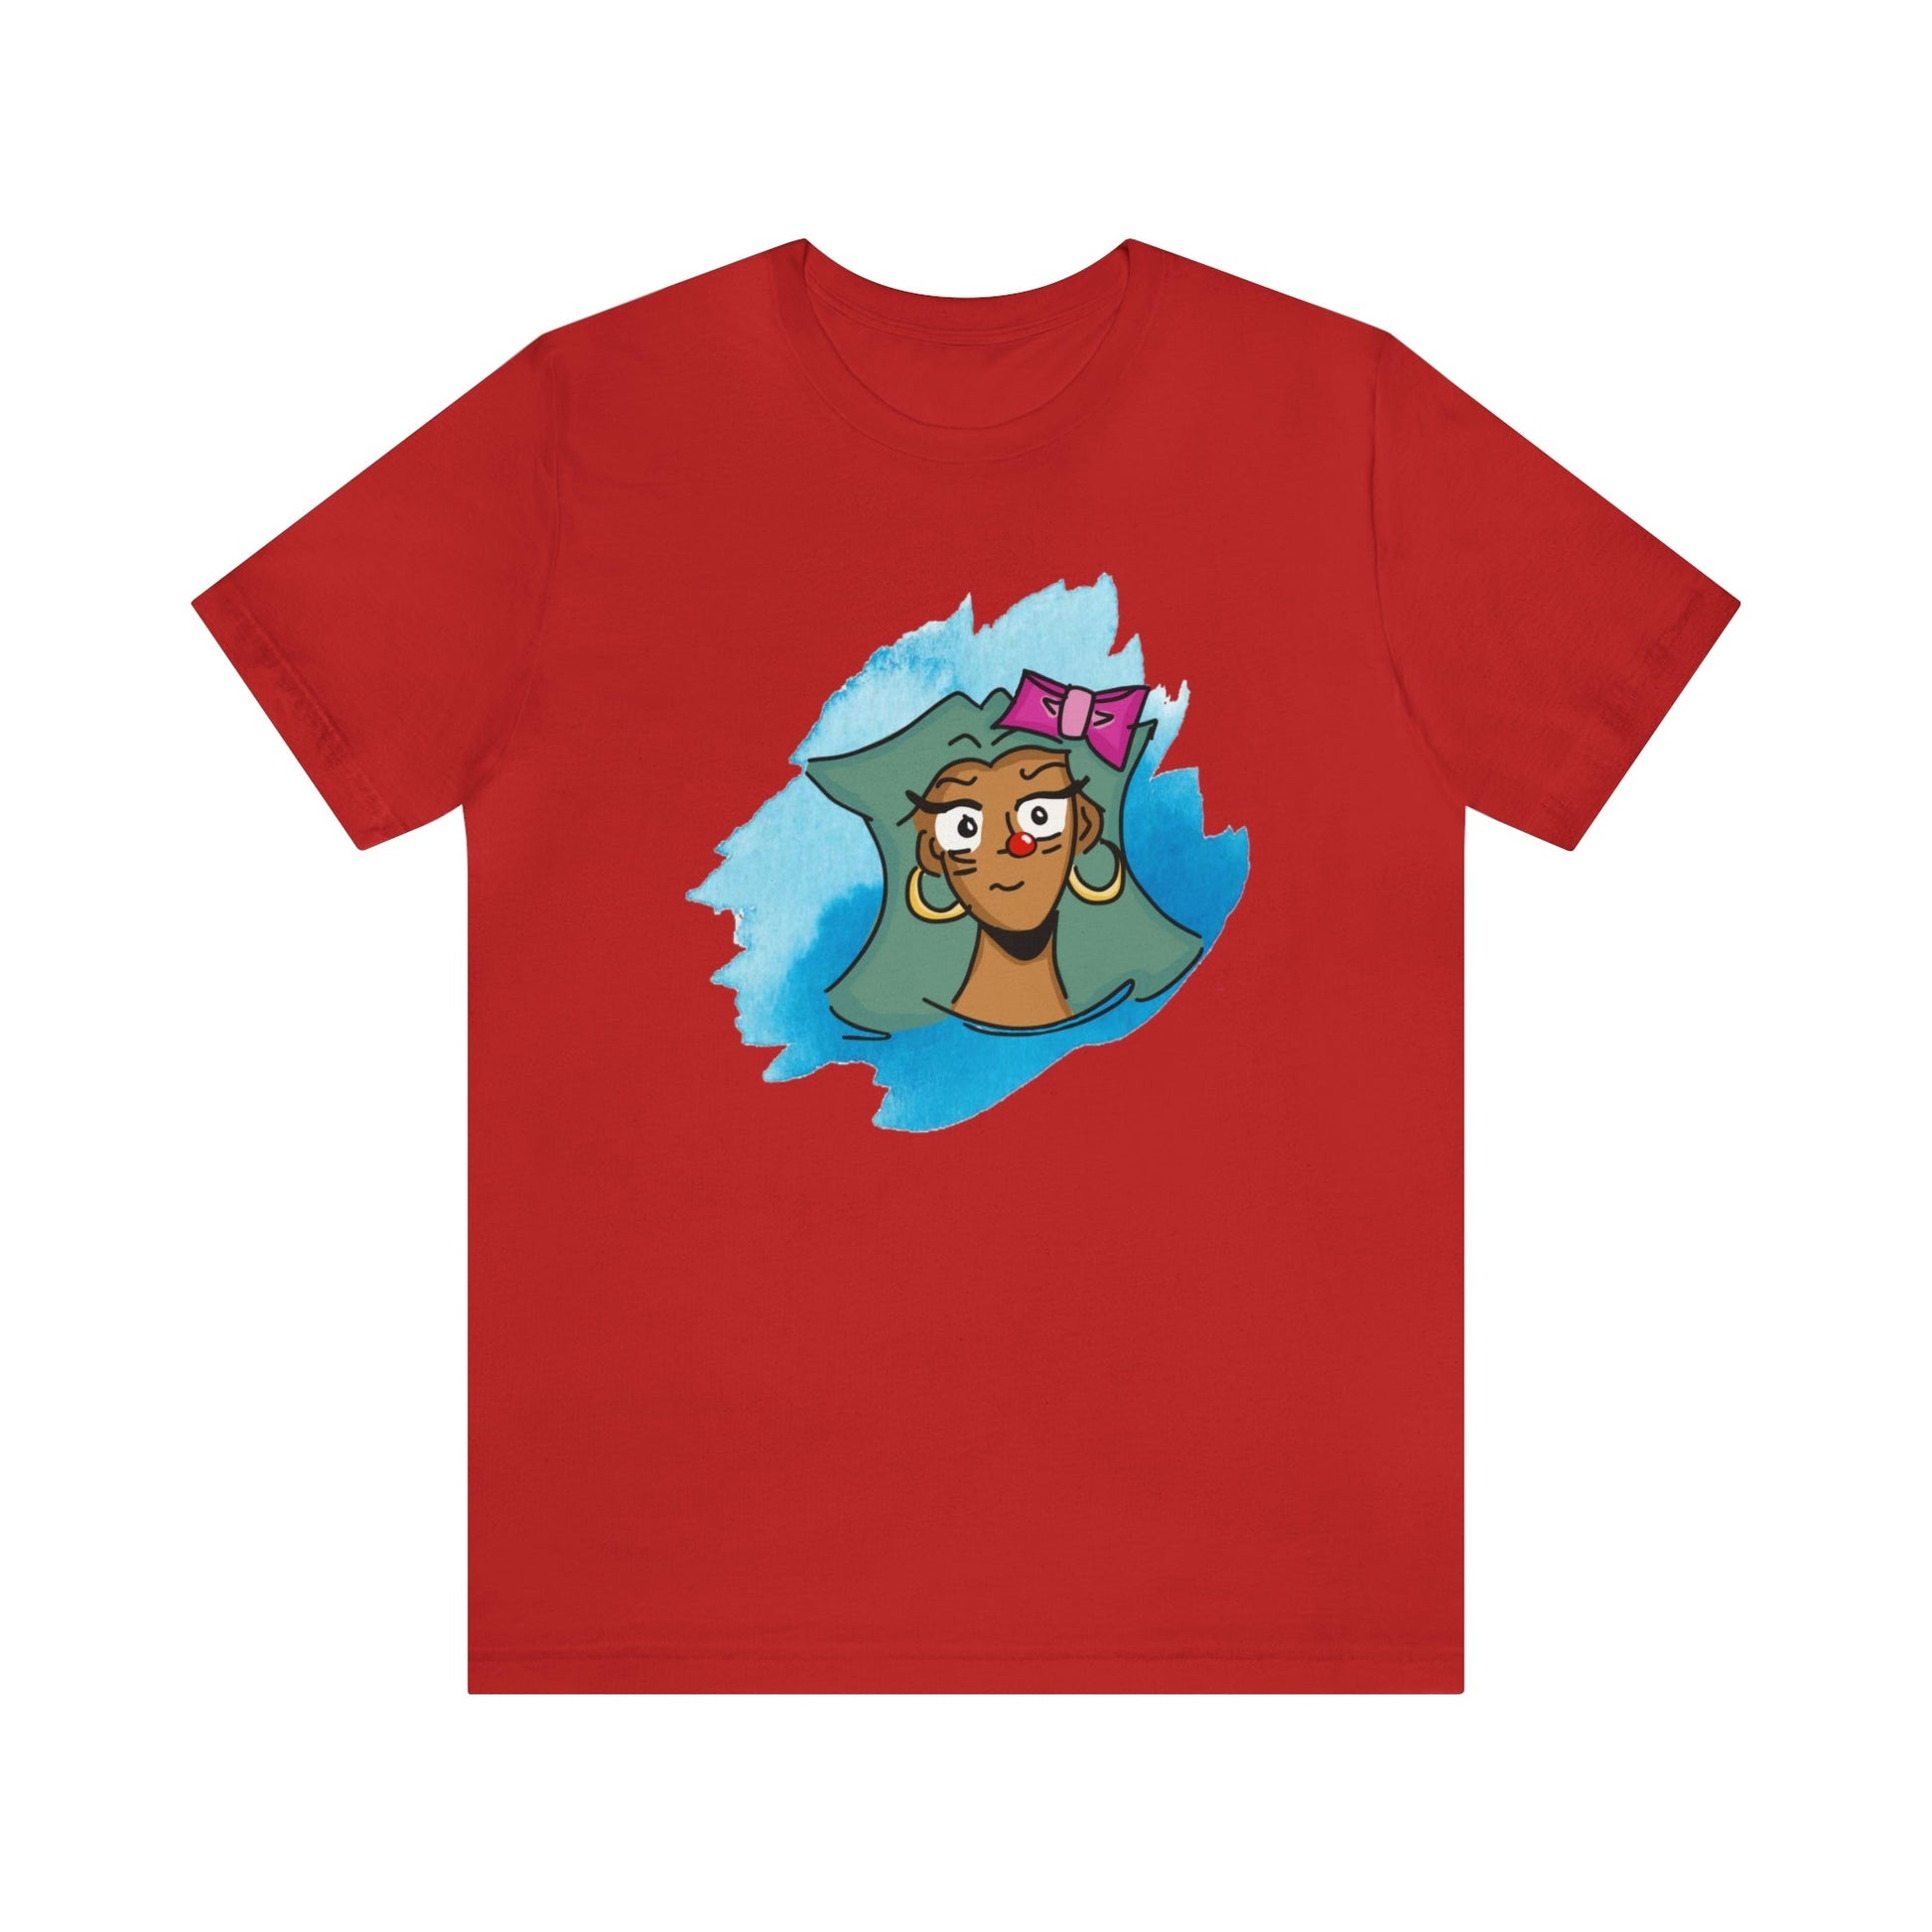 Red Nose Girl T-shirt-T-Shirt-Red-S-mysticalcherry